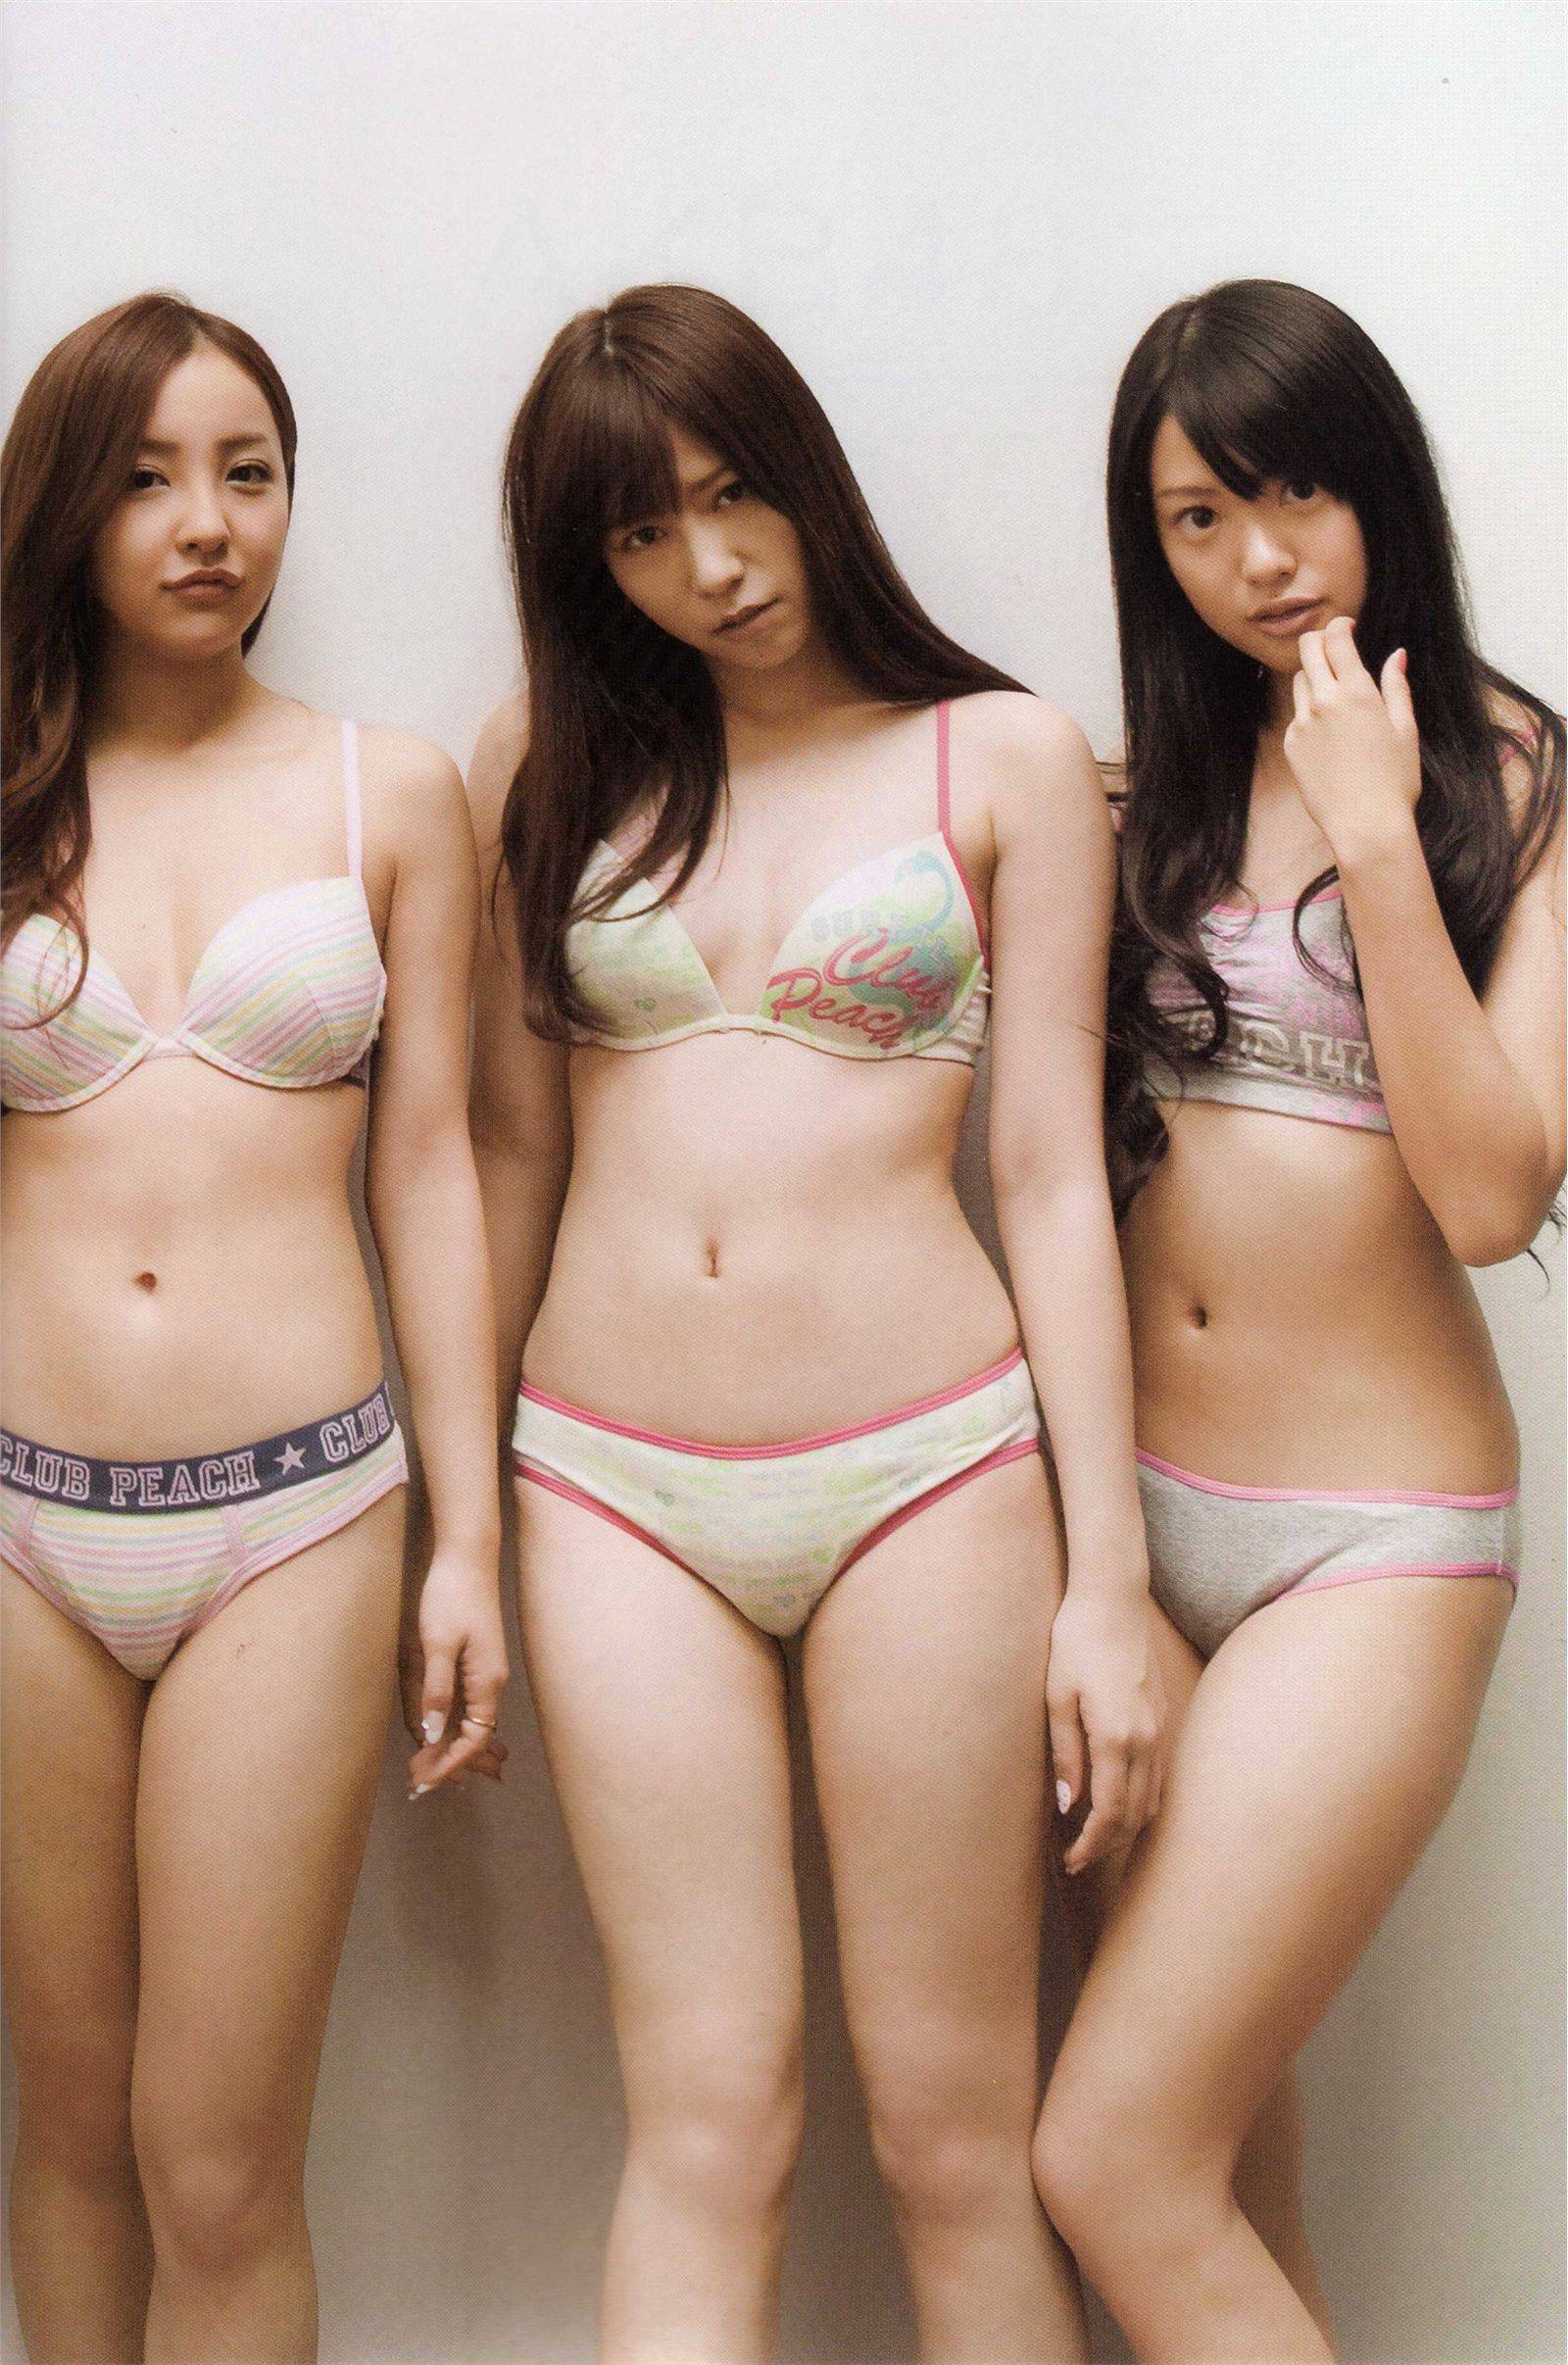 AKB48 women's group